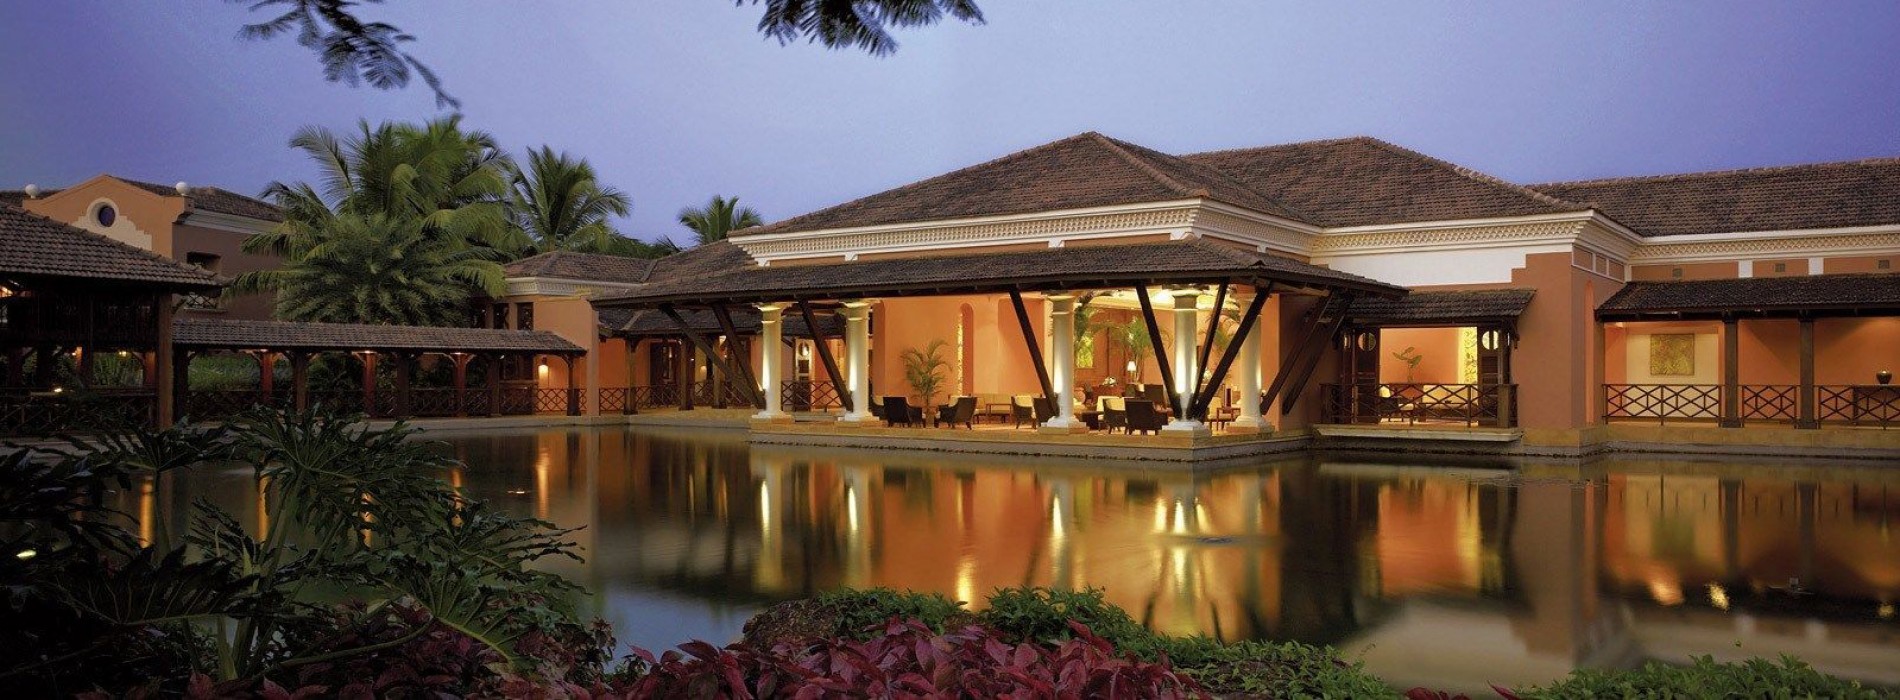 ITC Hotels acquires Park Hyatt Goa Resort and Spa